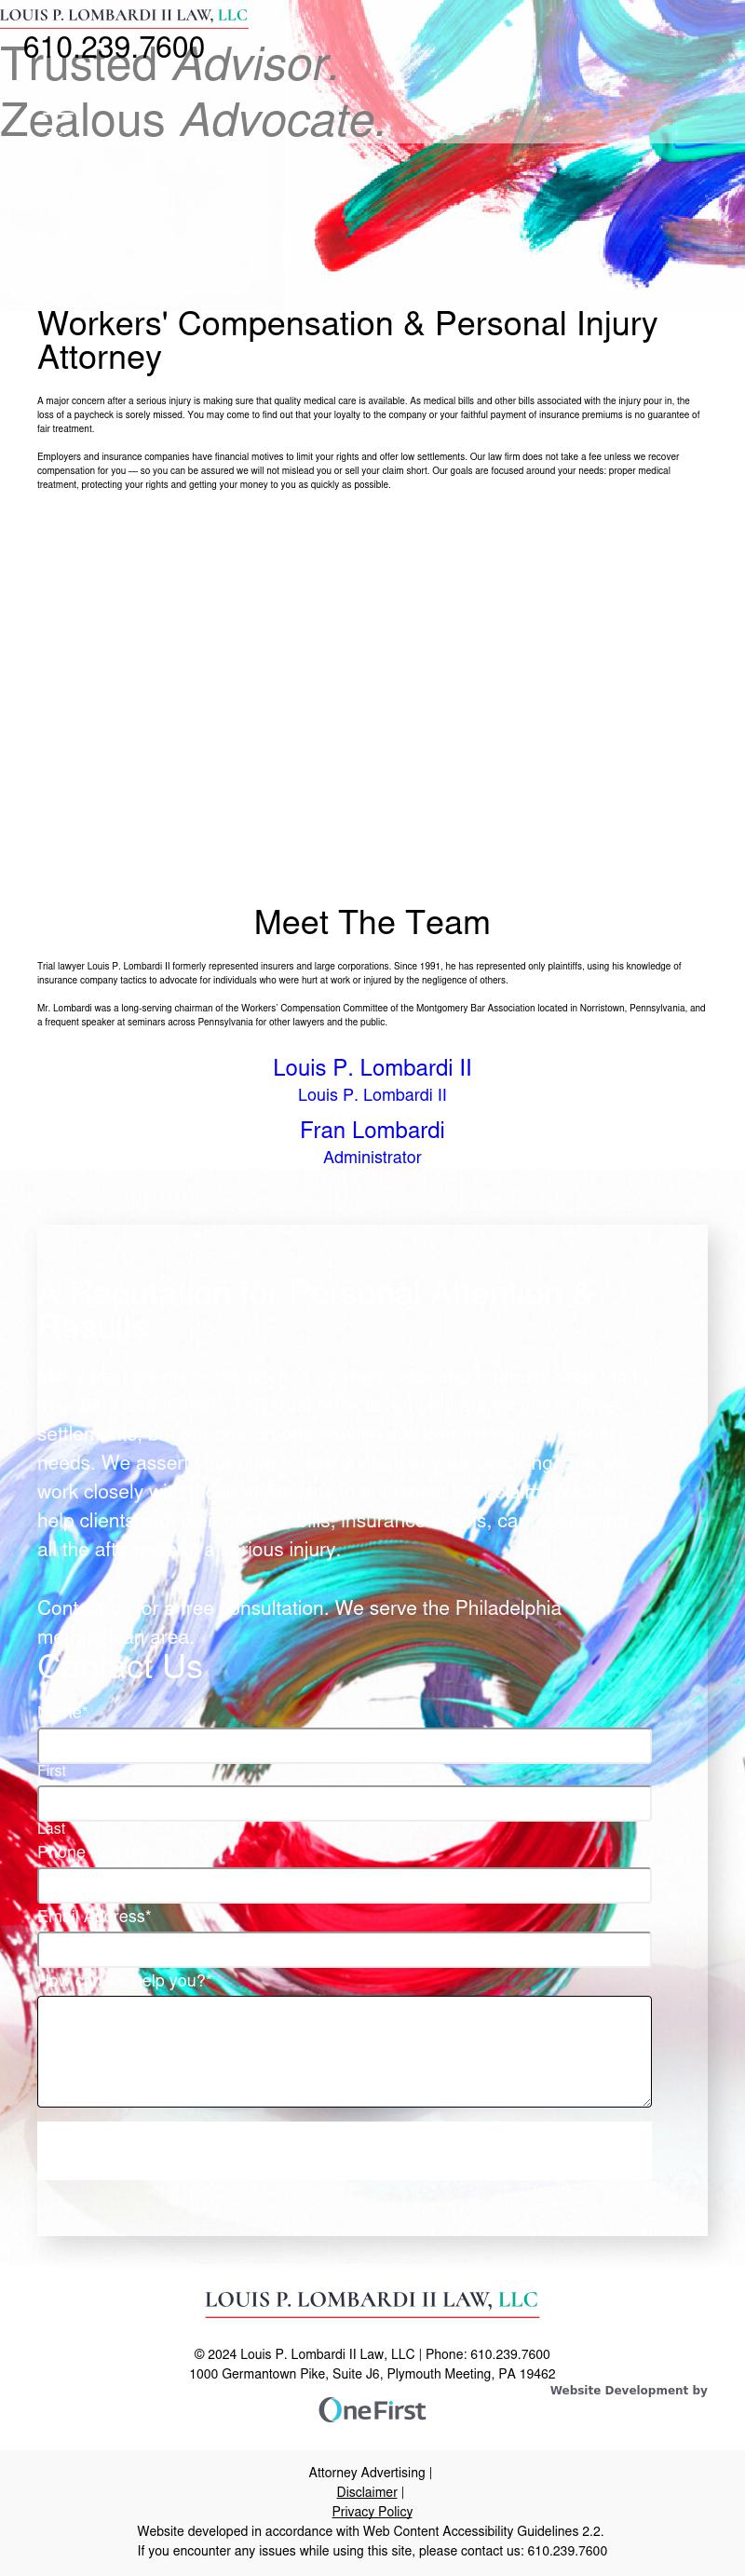 Louis P. Lombardi II & Associates - Plymouth Meeting PA Lawyers